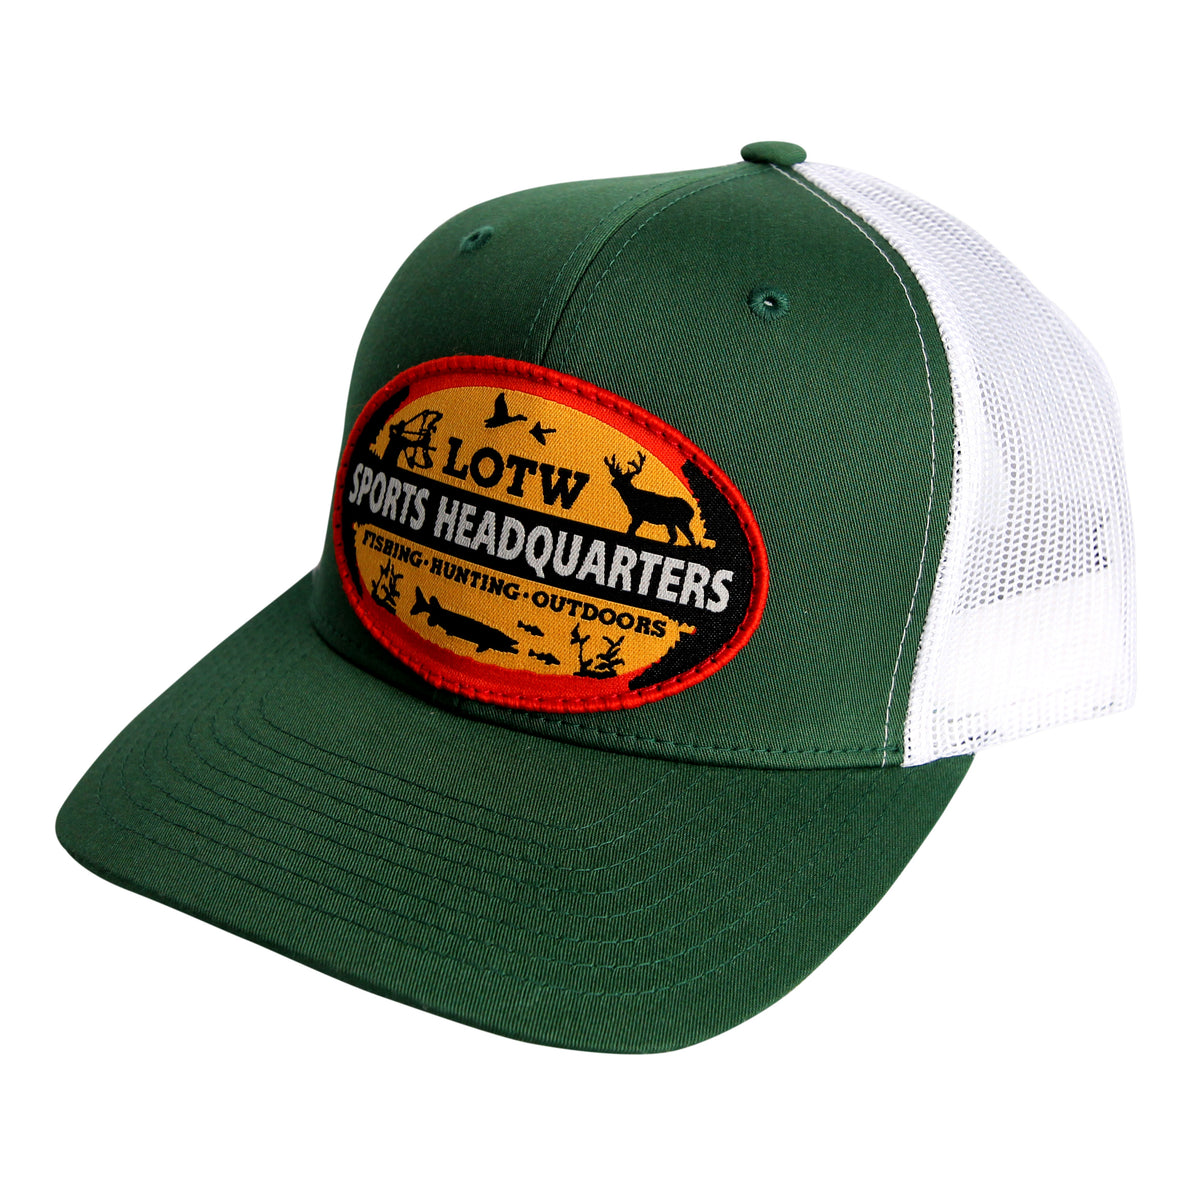 LOTW Sports Headquarters Retro Snapback Trucker Hats - Evergreen/White